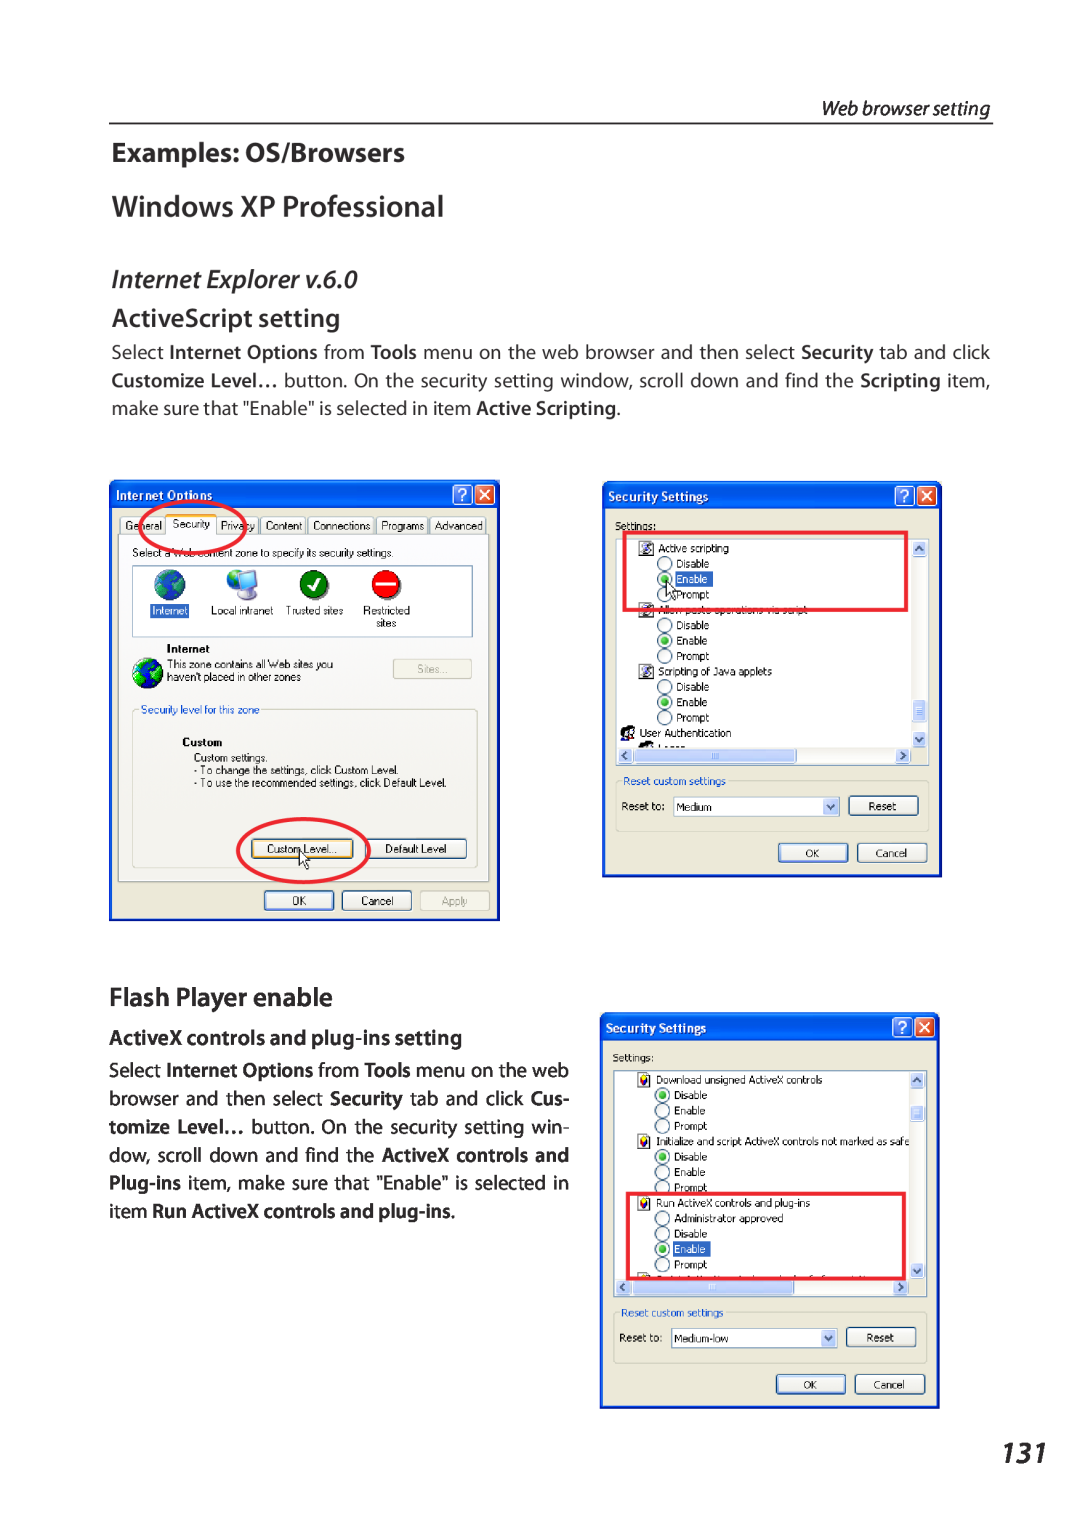 Eiki QXXAVC922---P owner manual Windows XP Professional, Examples OS/Browsers, Internet Explorer, ActiveScript setting 